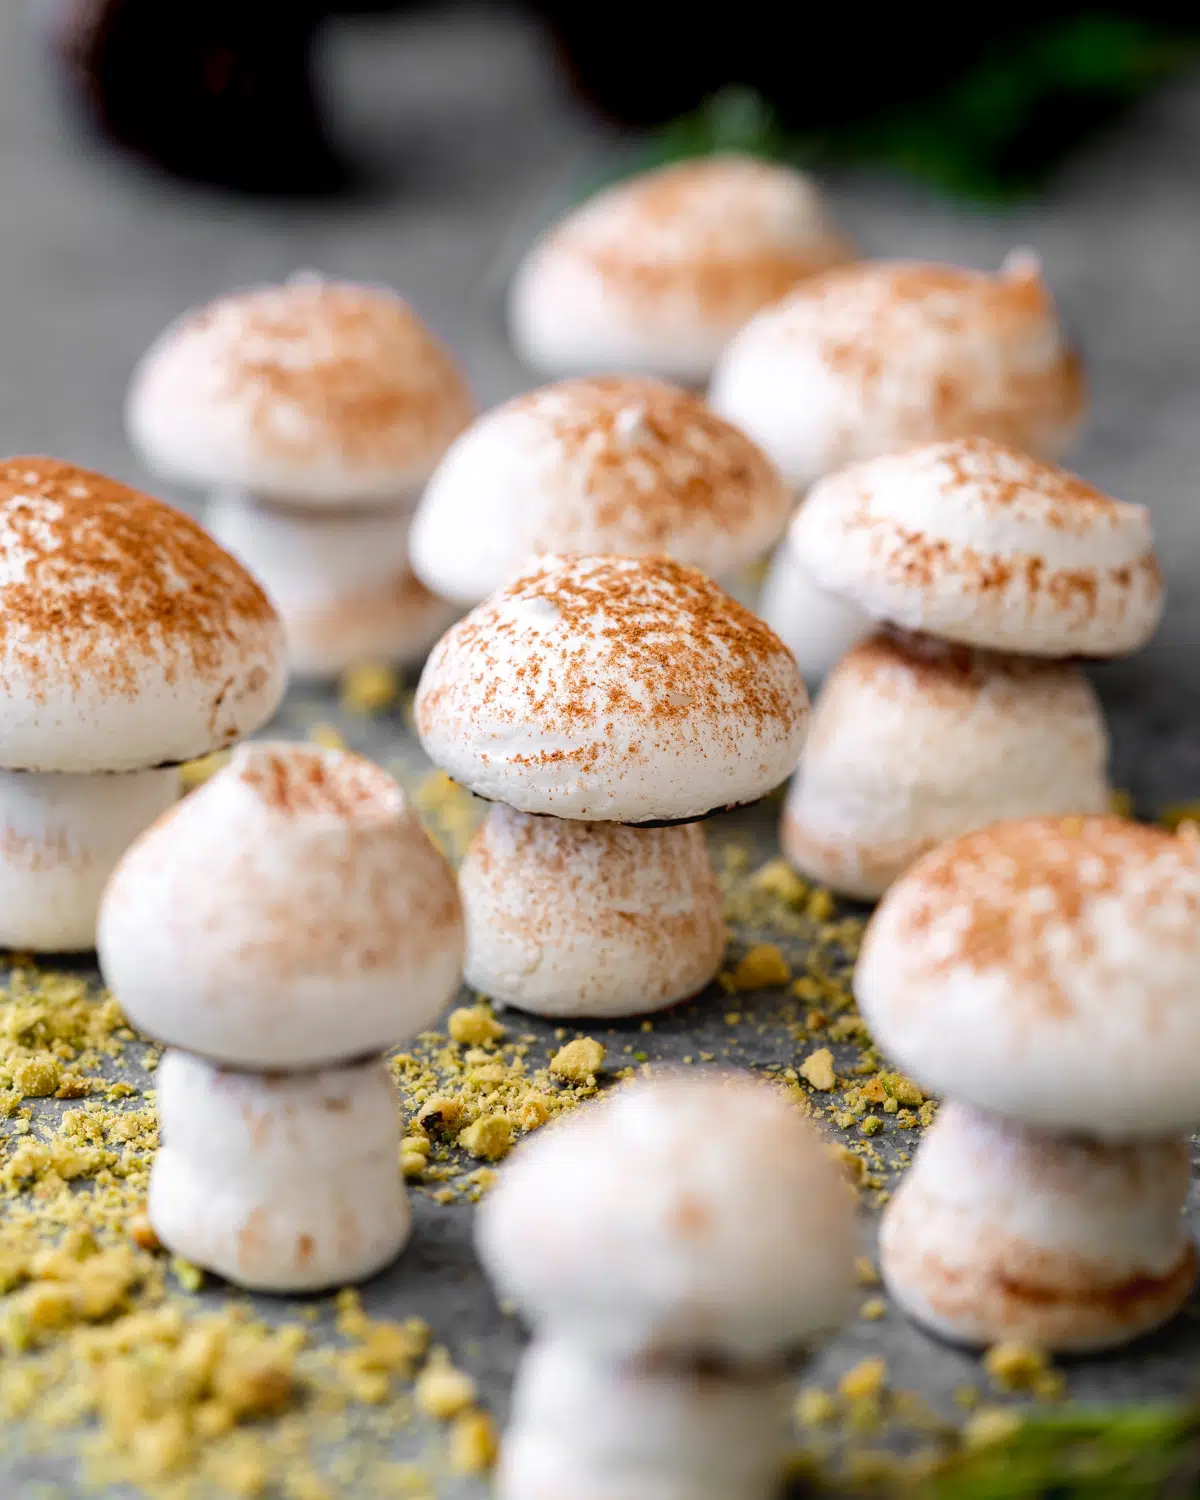 aquafaba meringue mushrooms on green pistachio crumble.